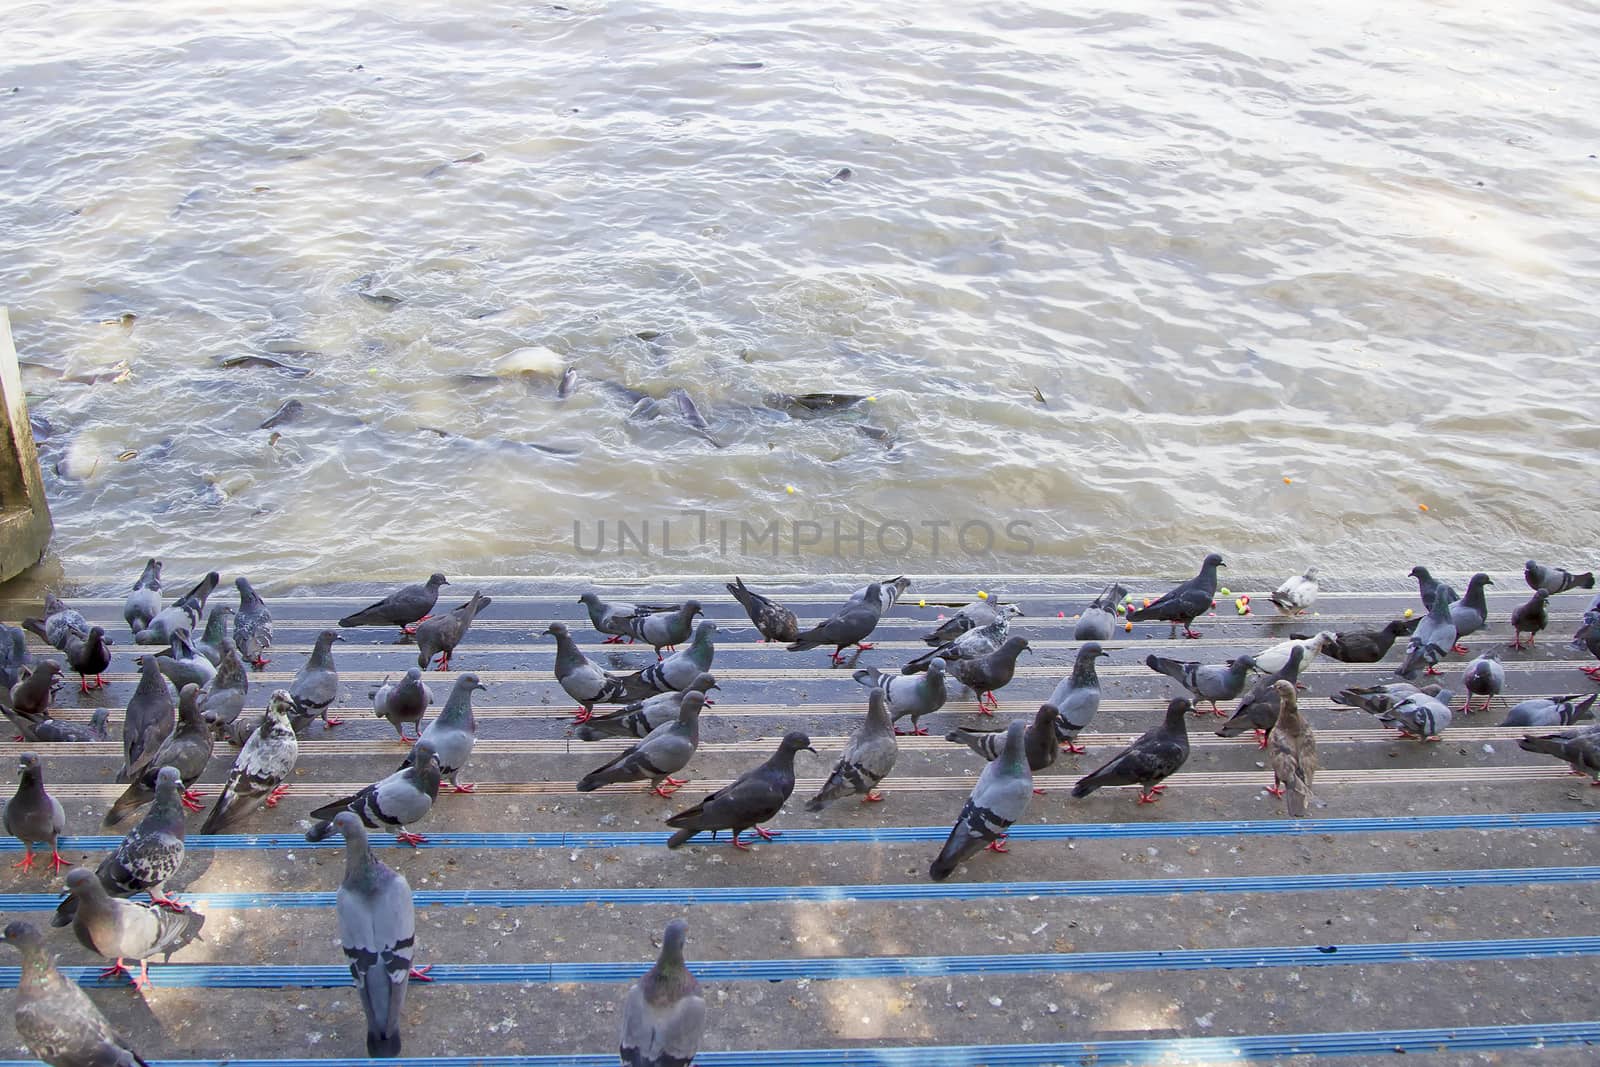 Many pigeons On the river floor by TakerWalker